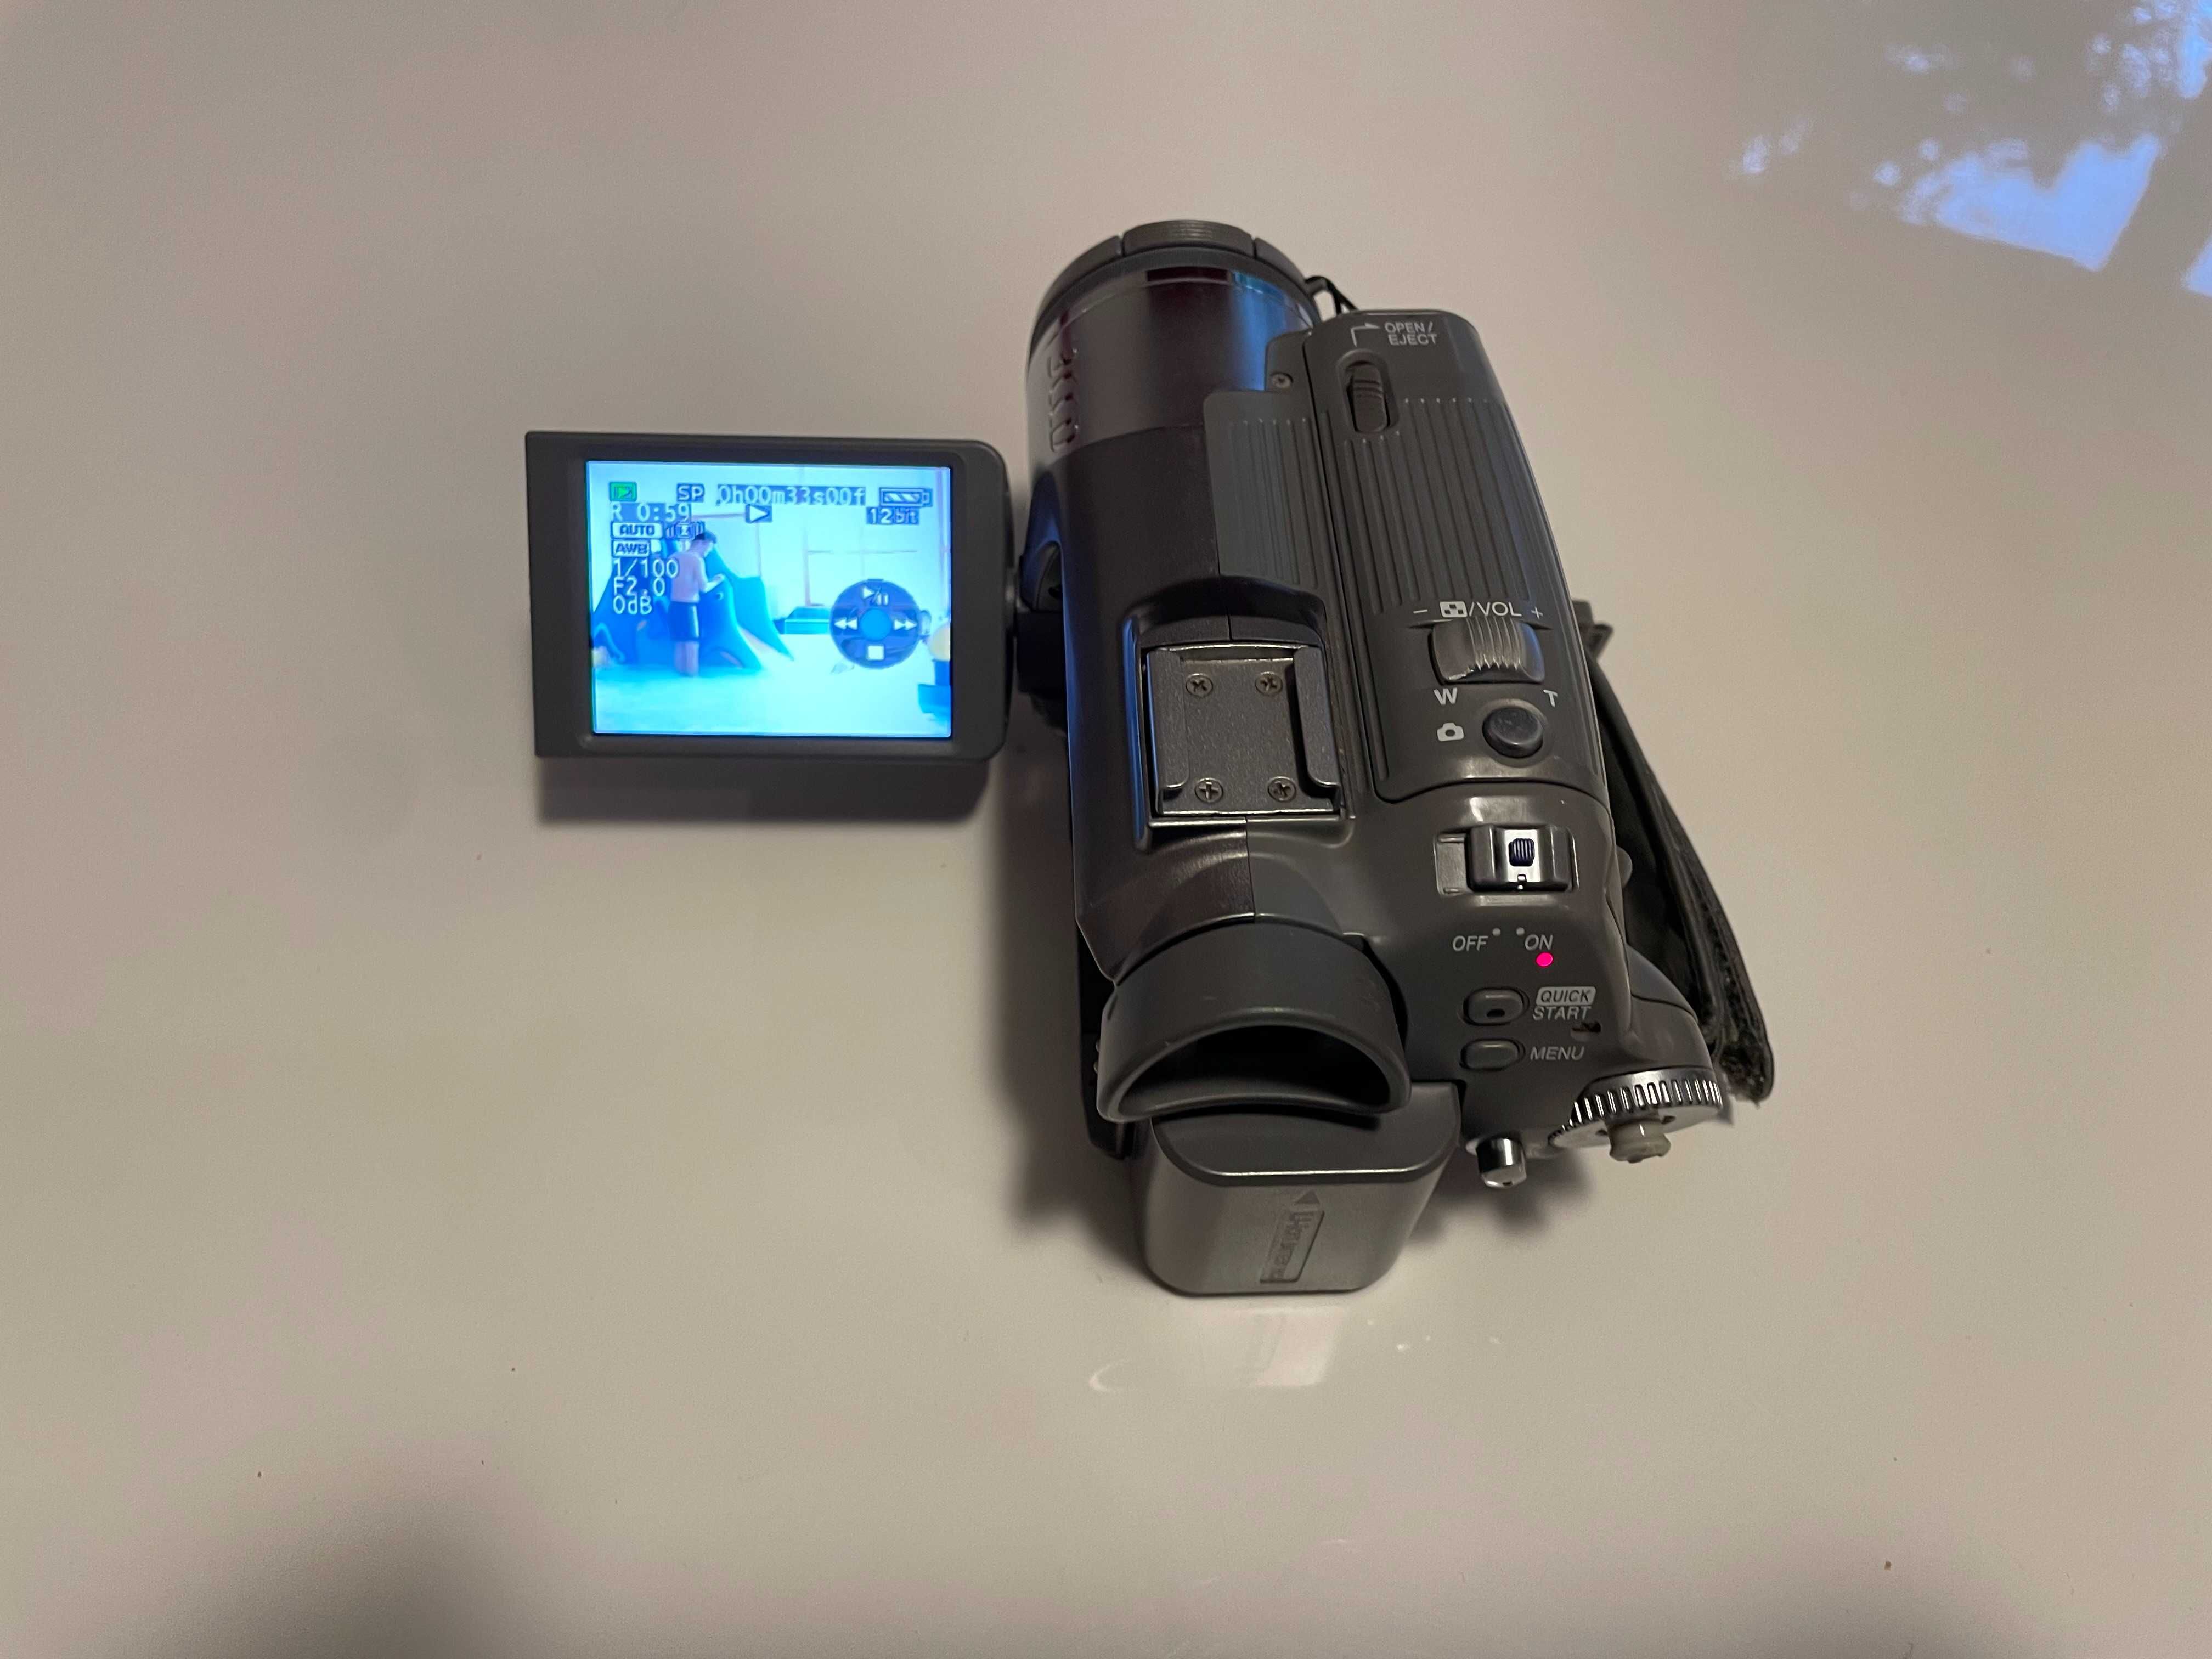 Panasonic dv camera NV-GS230 , made in Japan.